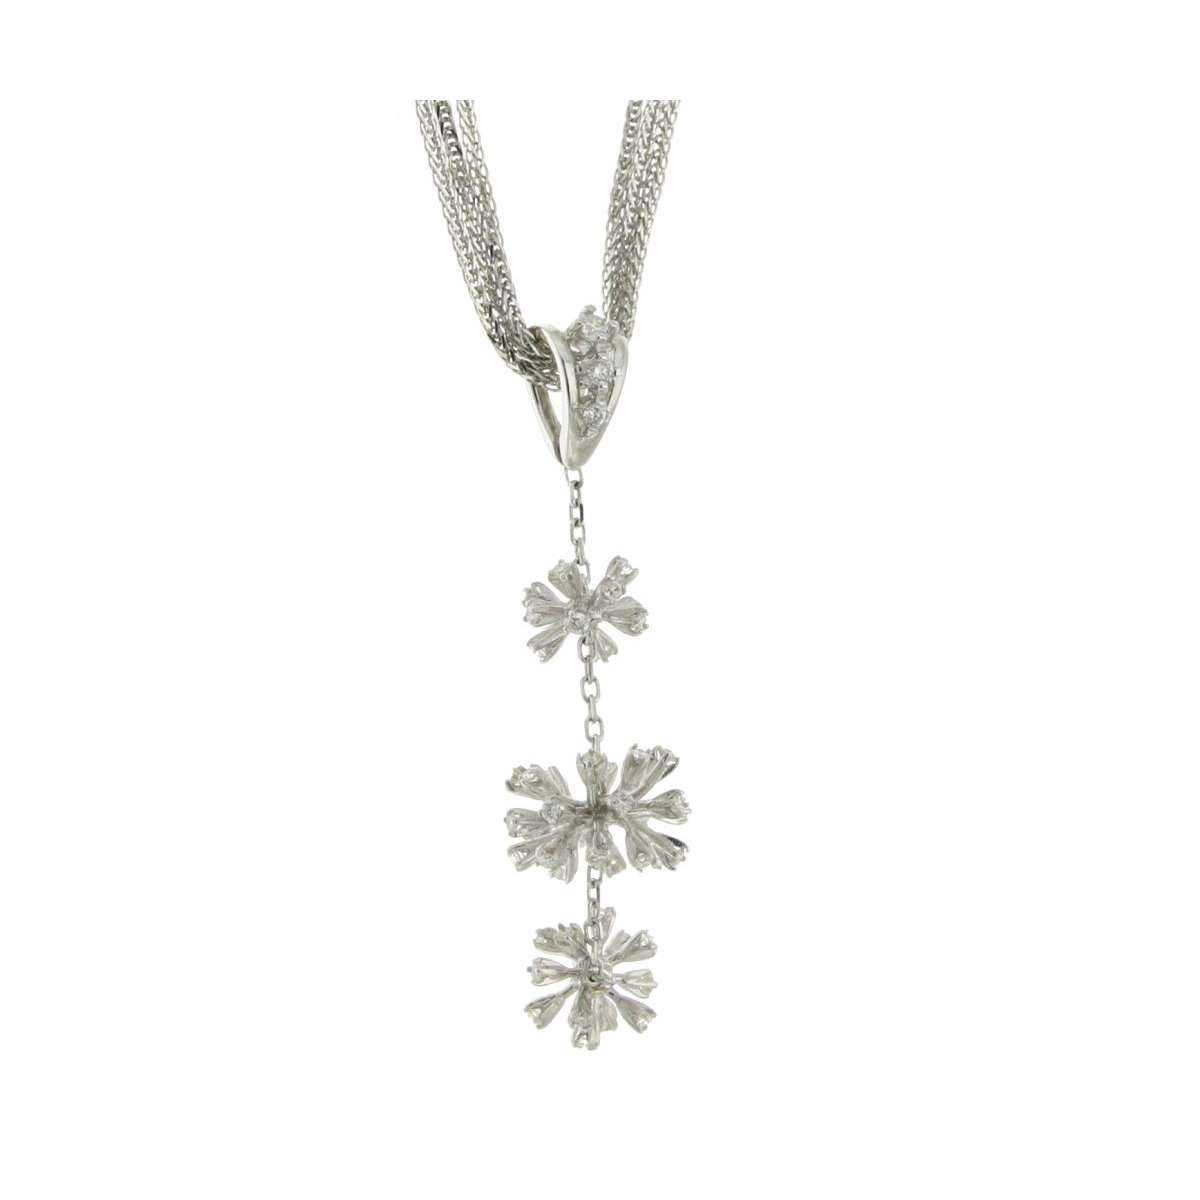 Multi-strand necklace, diamonds 0.56 carat G-VS1